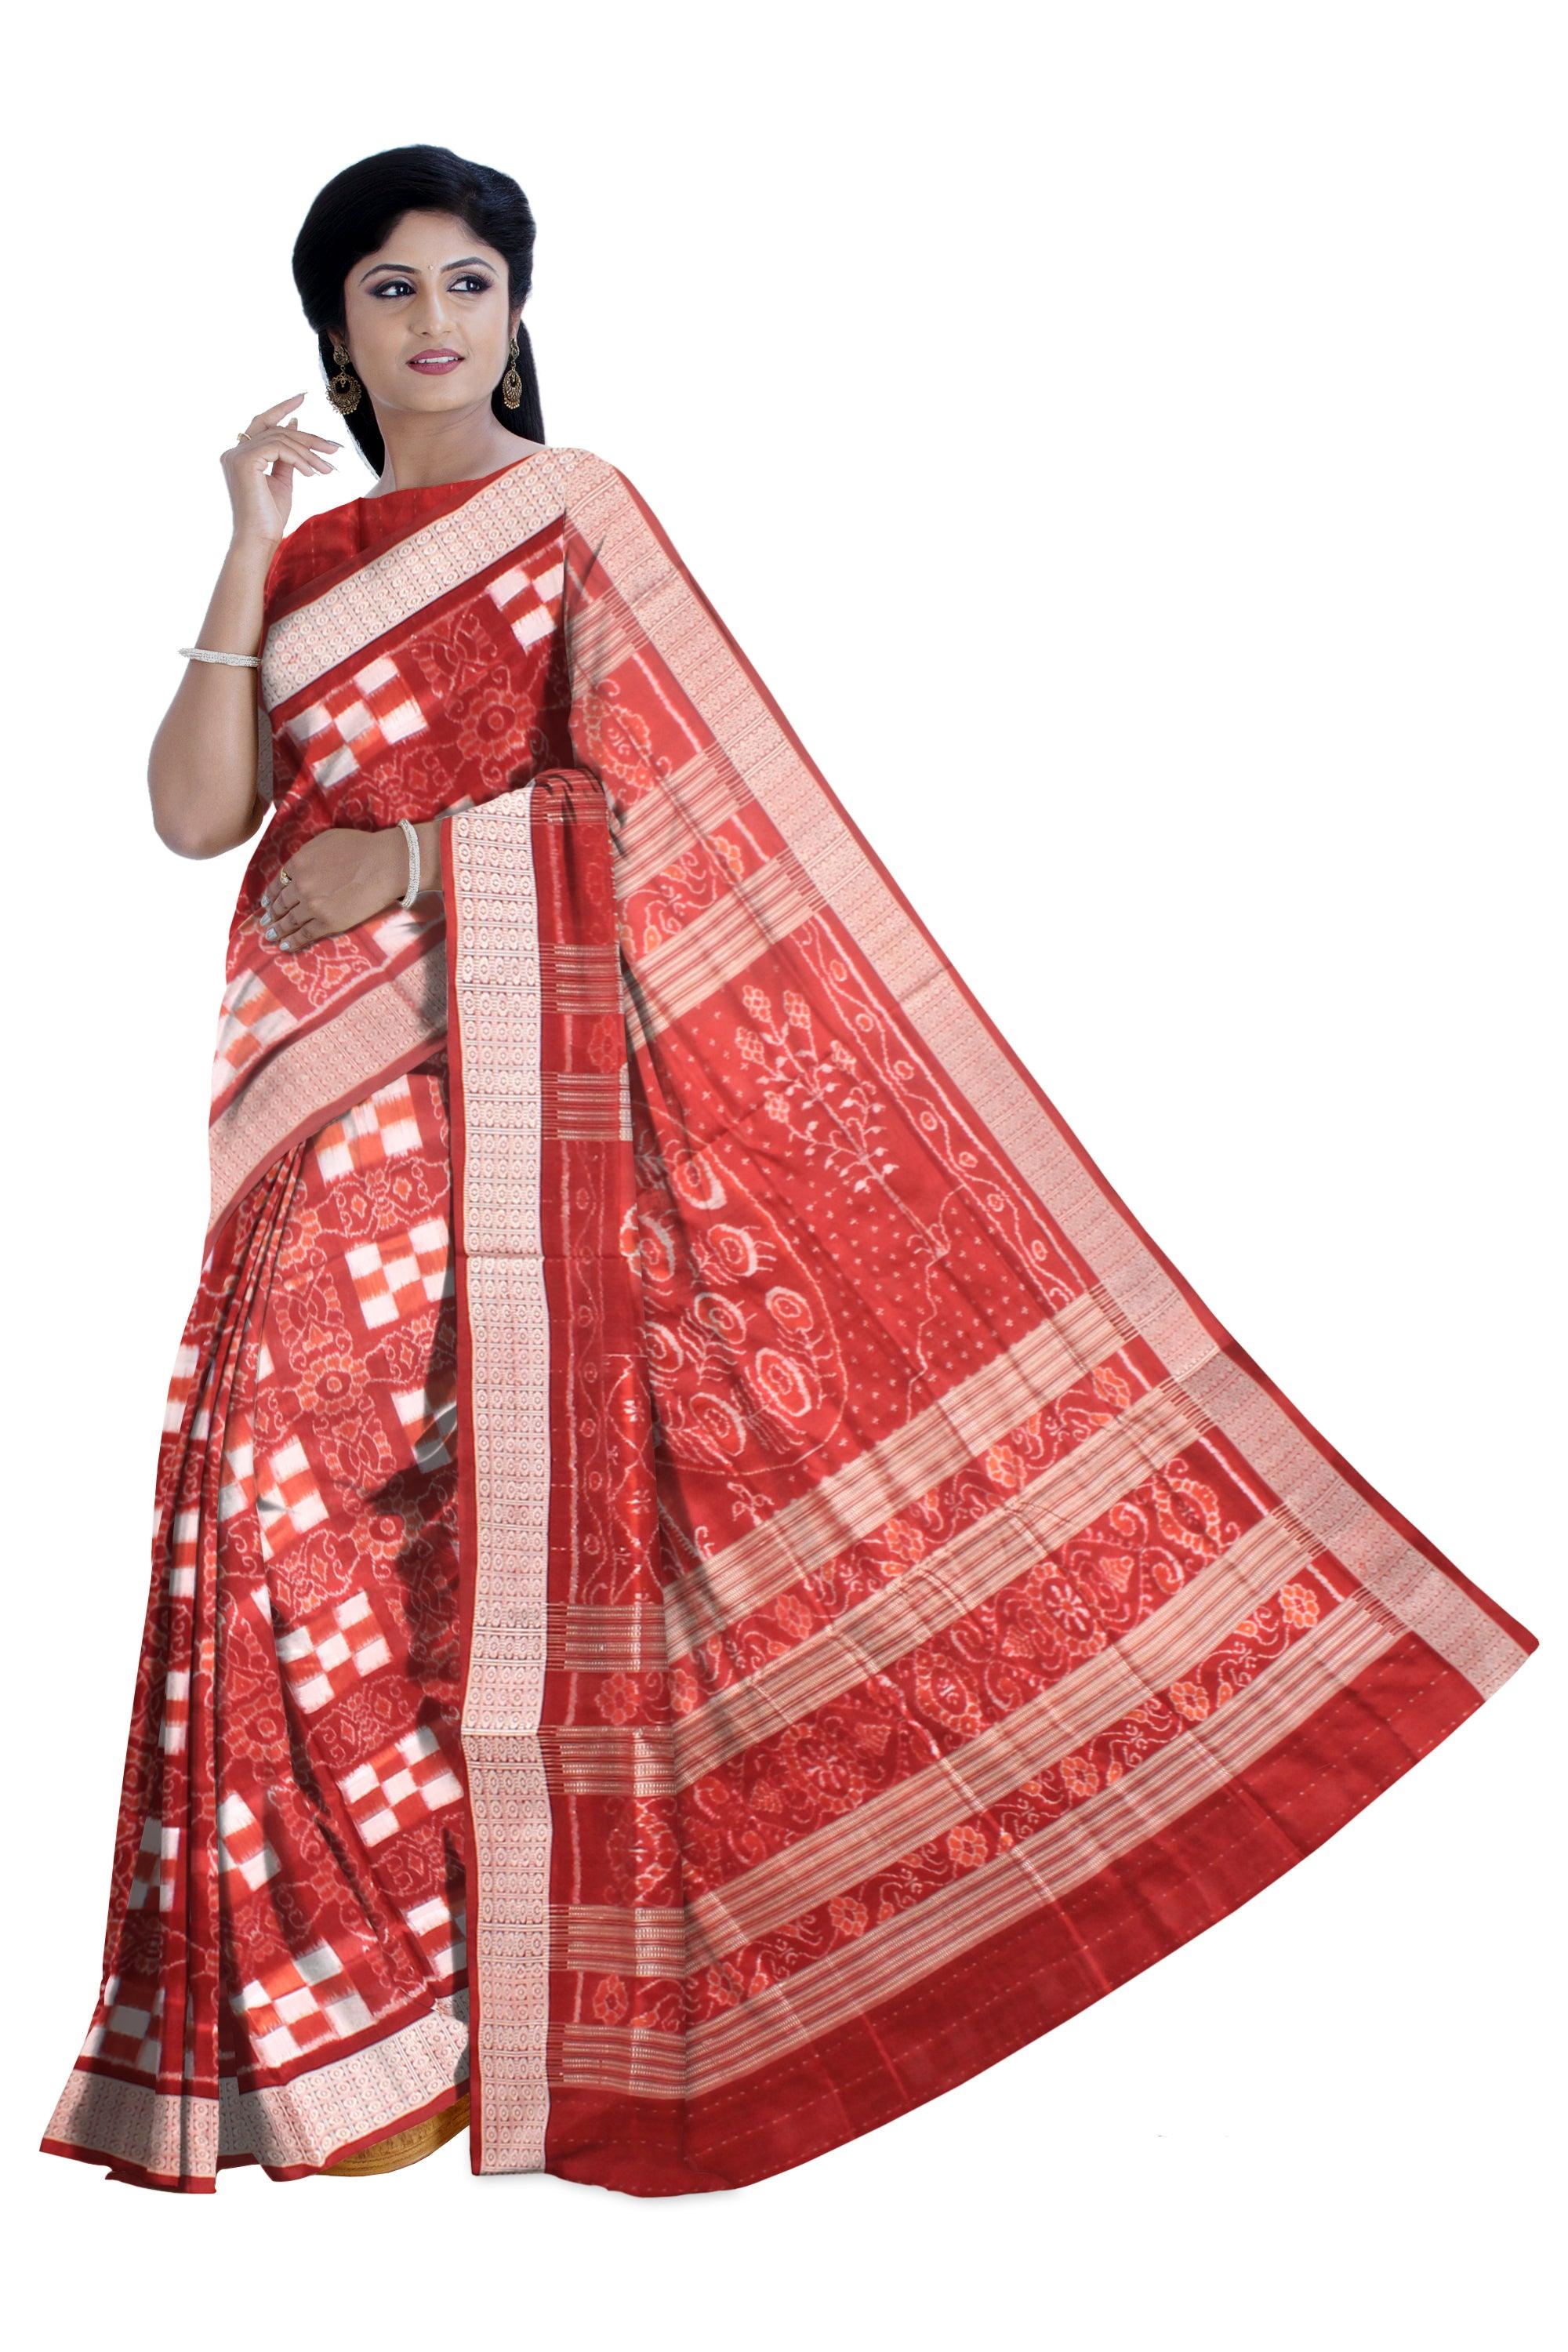 New Design ikat pattern Sambalpuri Pata Saree in Maroon and  White Color saree with blouse piece . - Koshali Arts & Crafts Enterprise